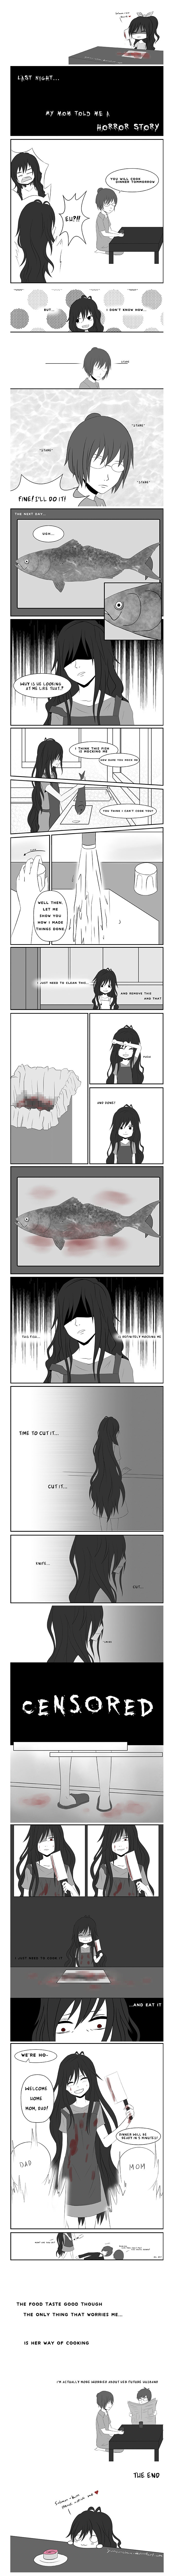 salmon and me by yunisu-chan